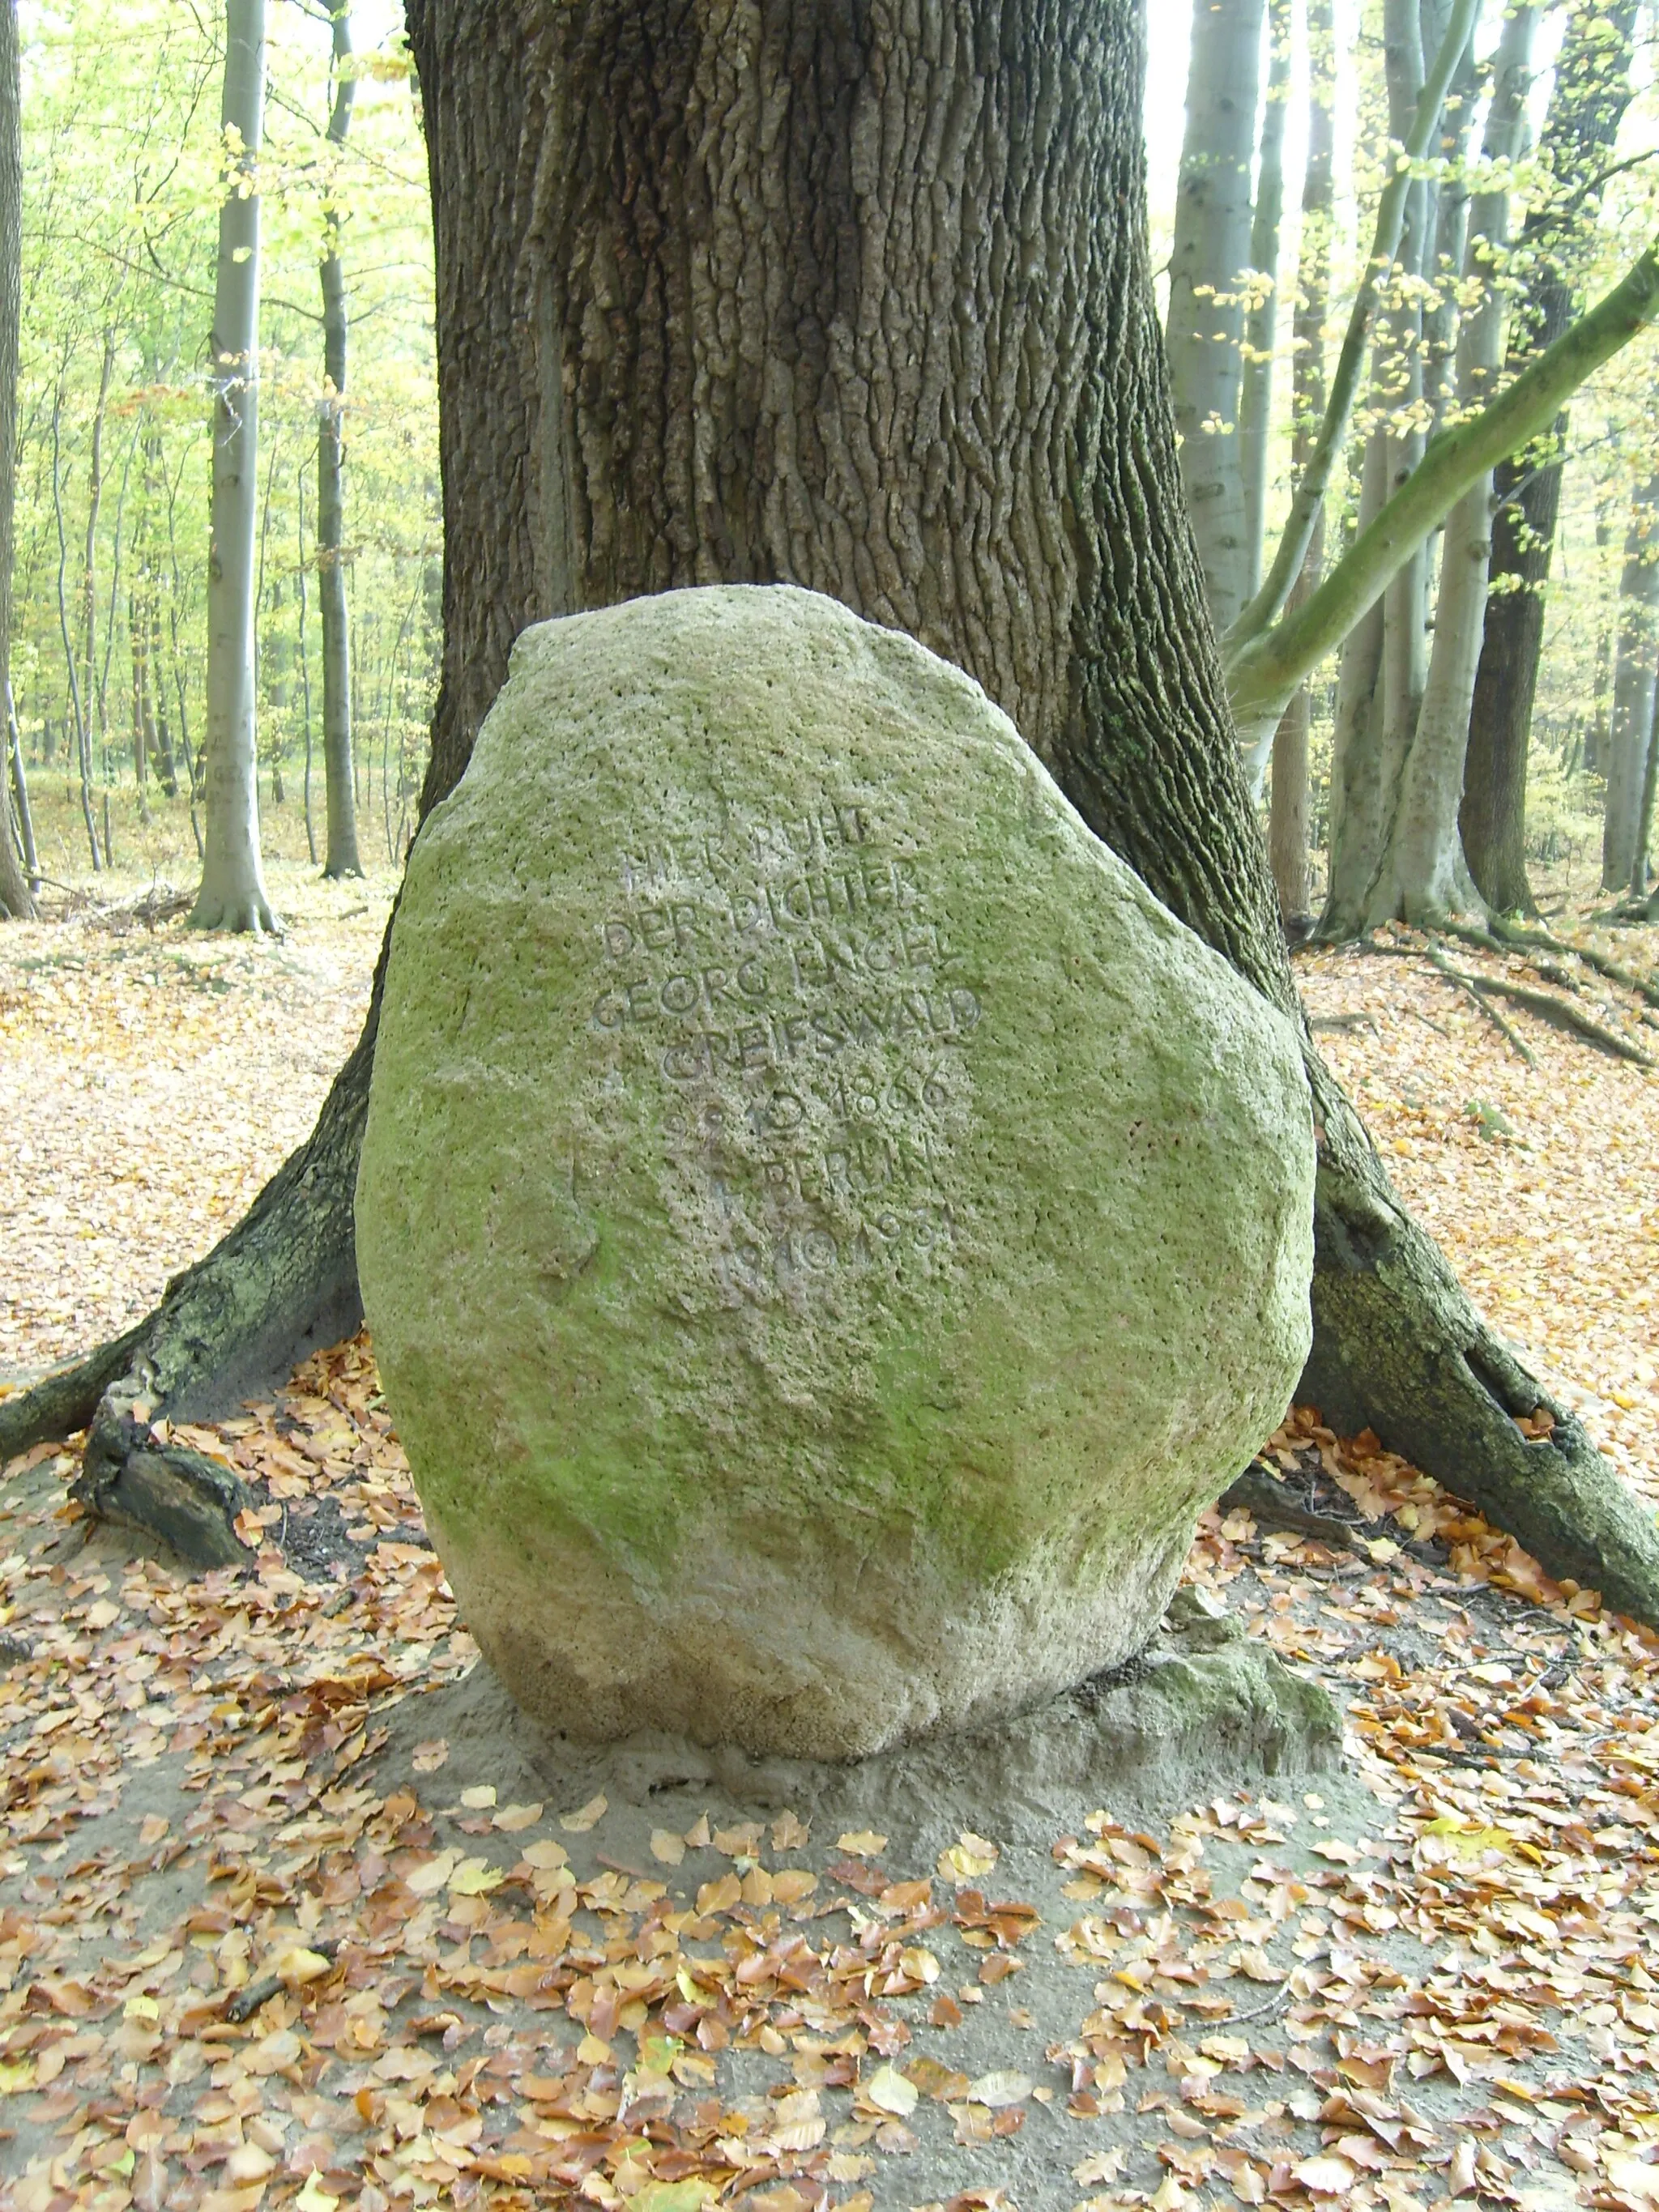 Photo showing: Gravestone of Georg Engel at the nature reserve "Eldena" in Greifswald, Germany